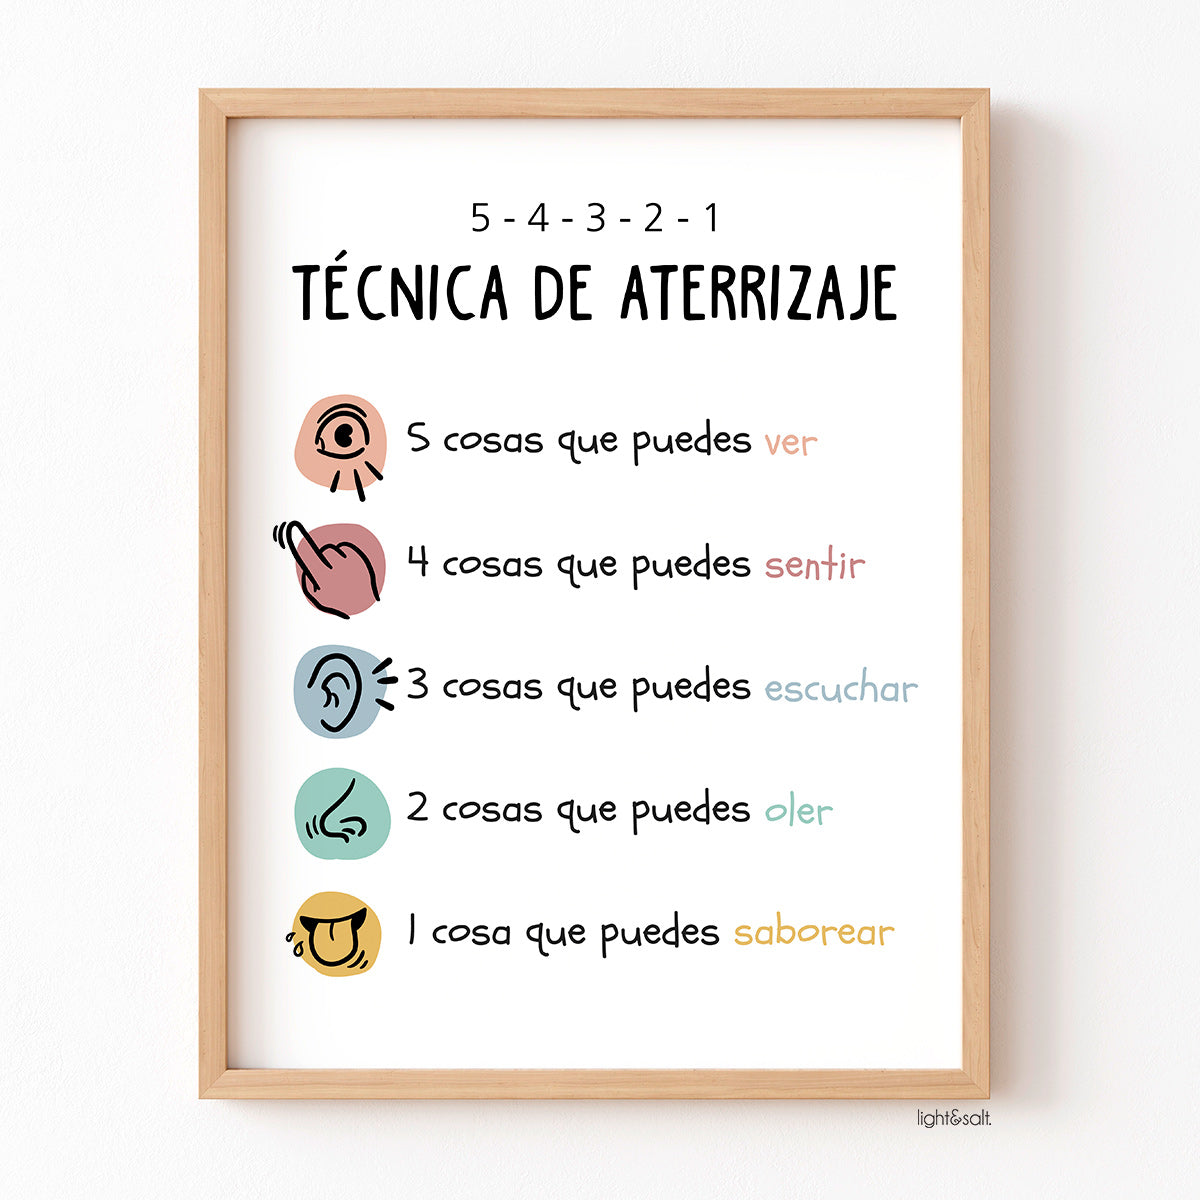 Spanish Grounding technique poster, técnica de aterrizaje